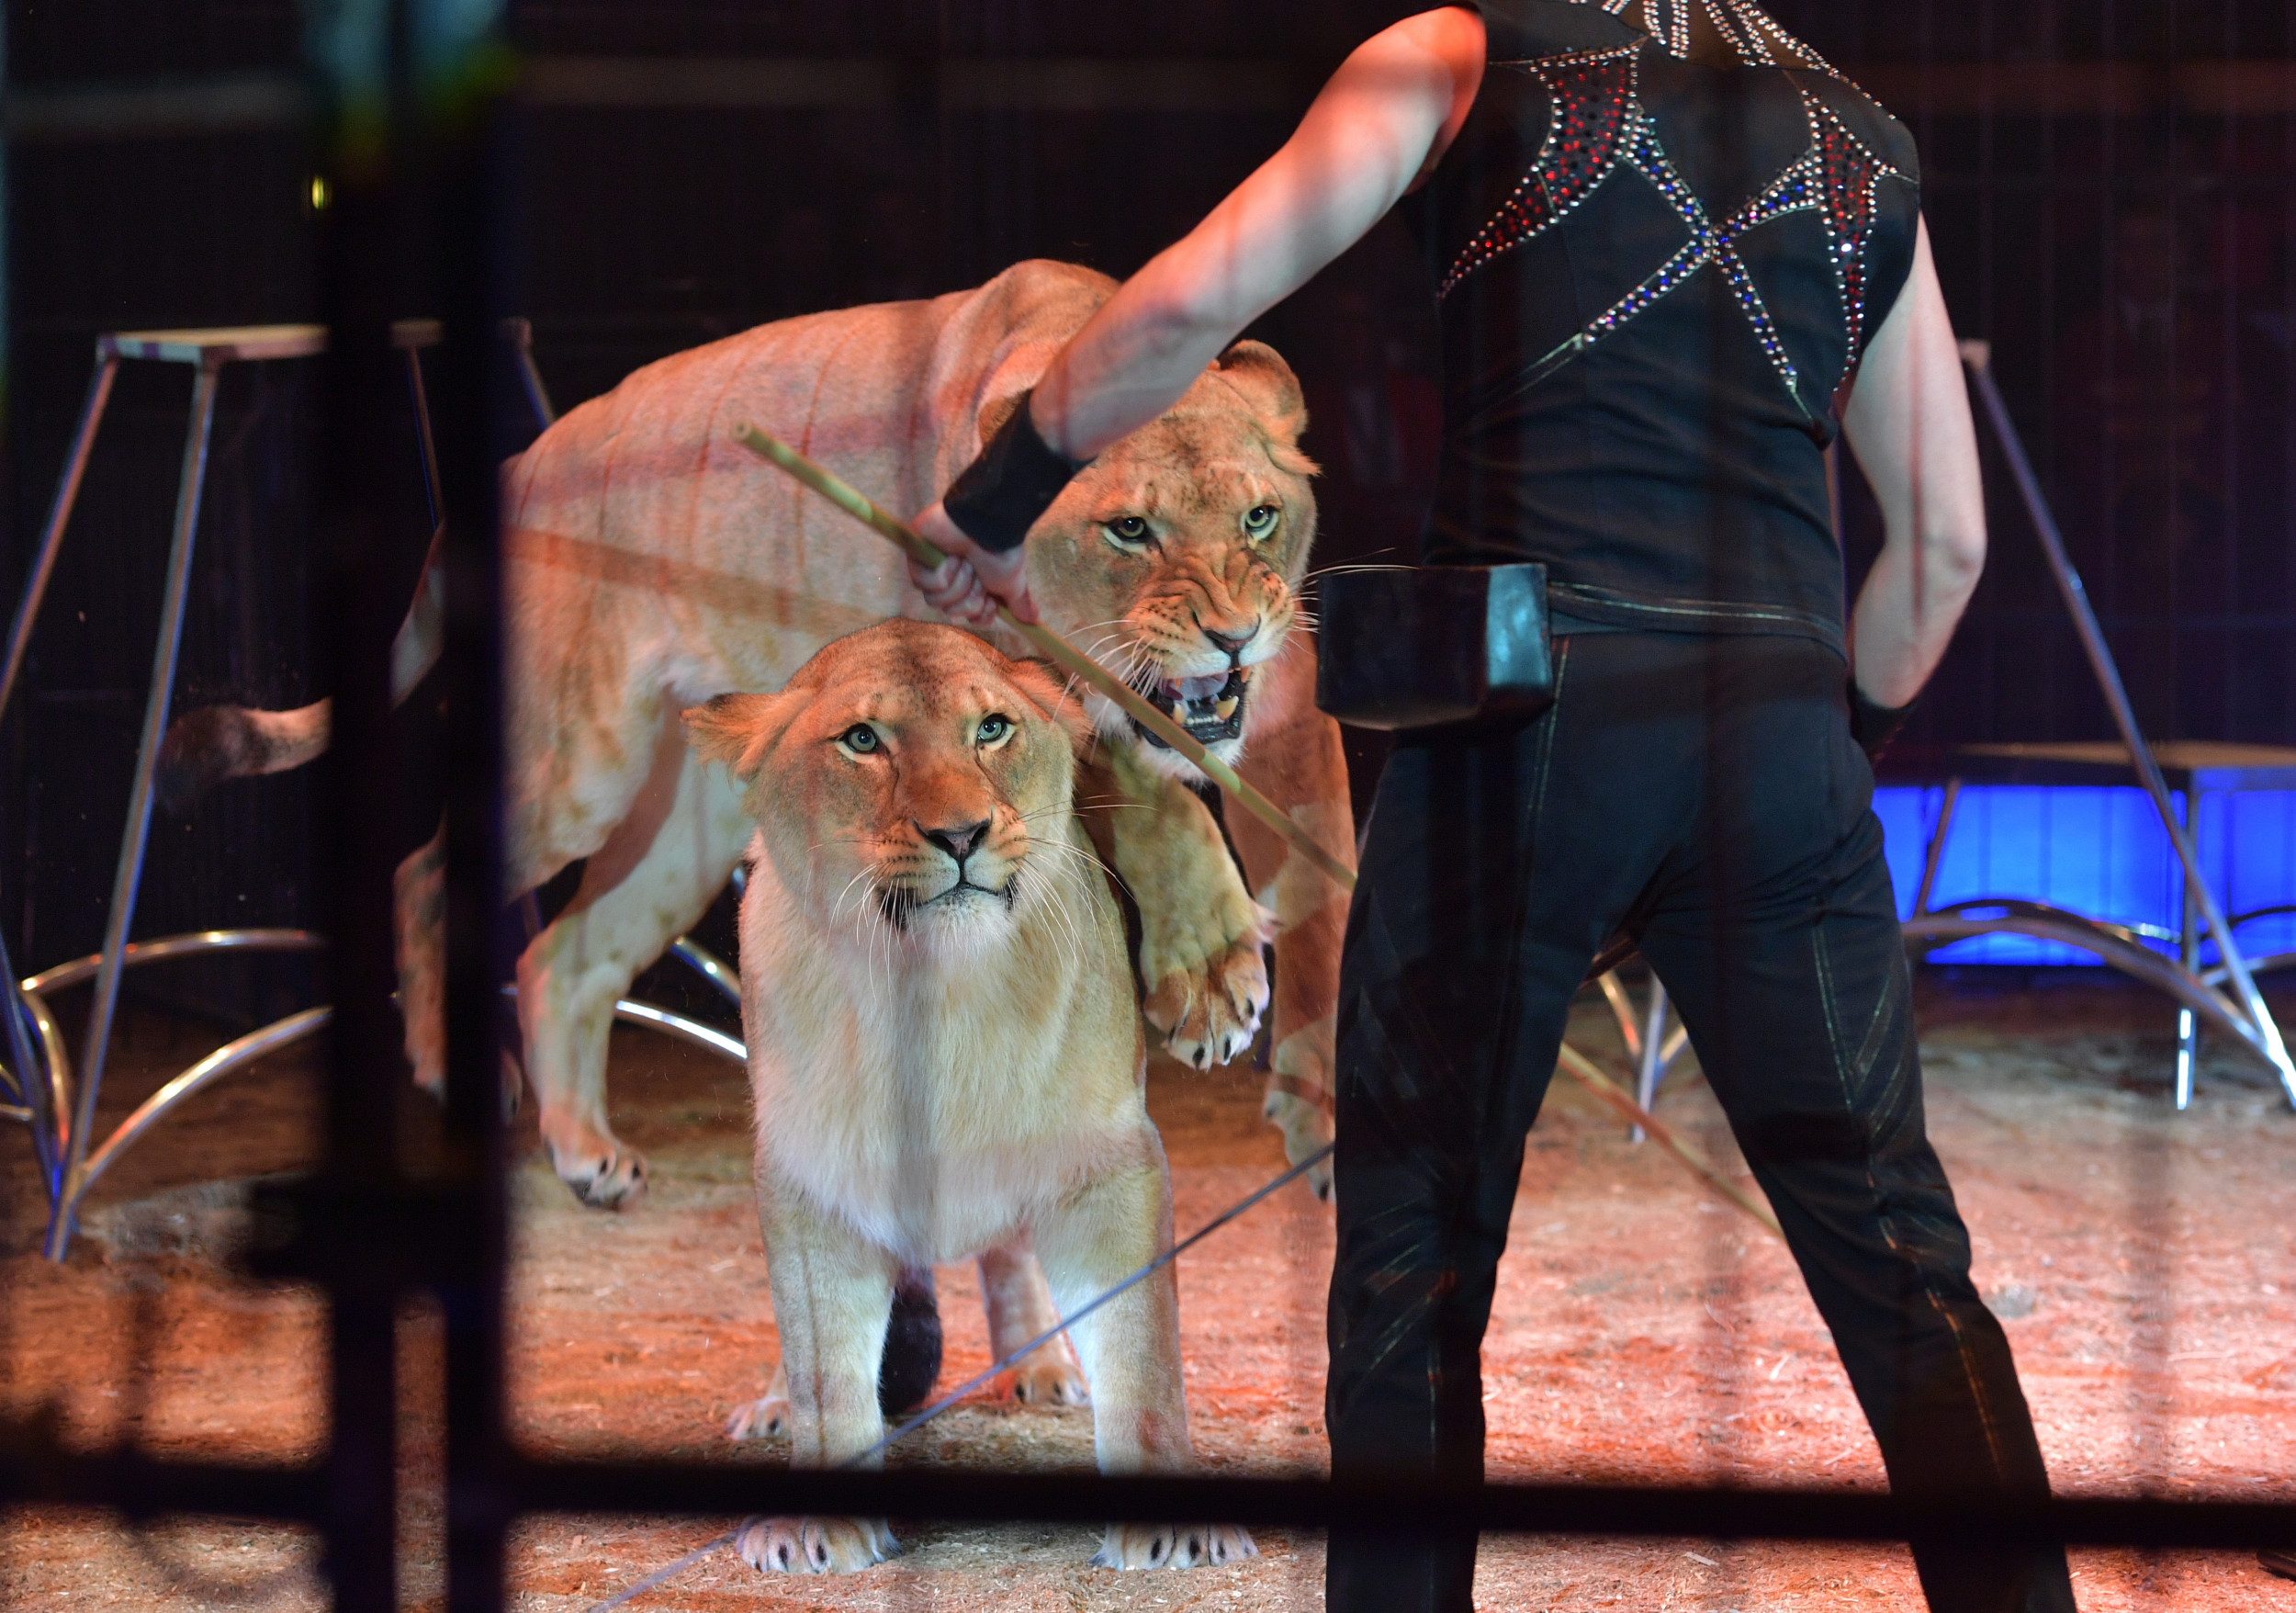 Lion Mauls Circus Handler in Horrific Video